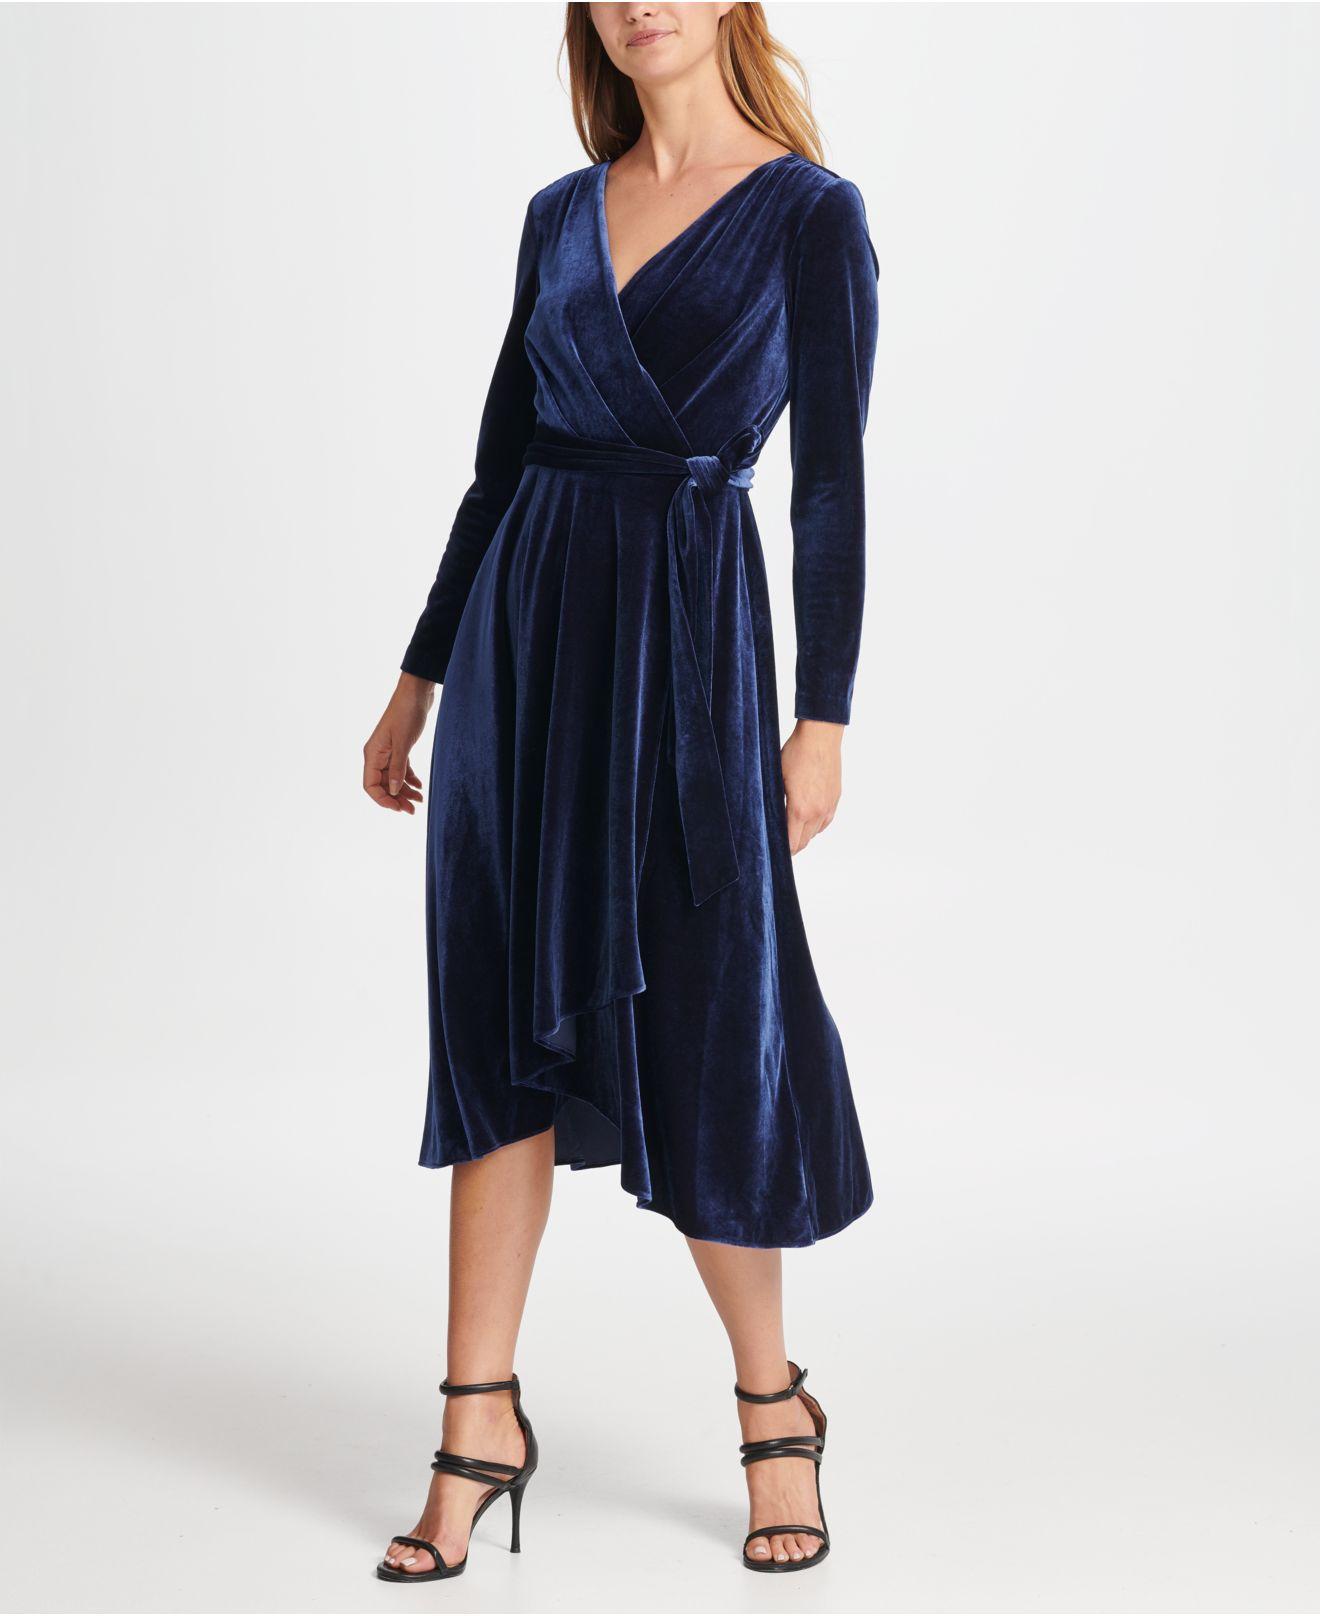 blue velvet wrap dress Big sale - OFF 79%